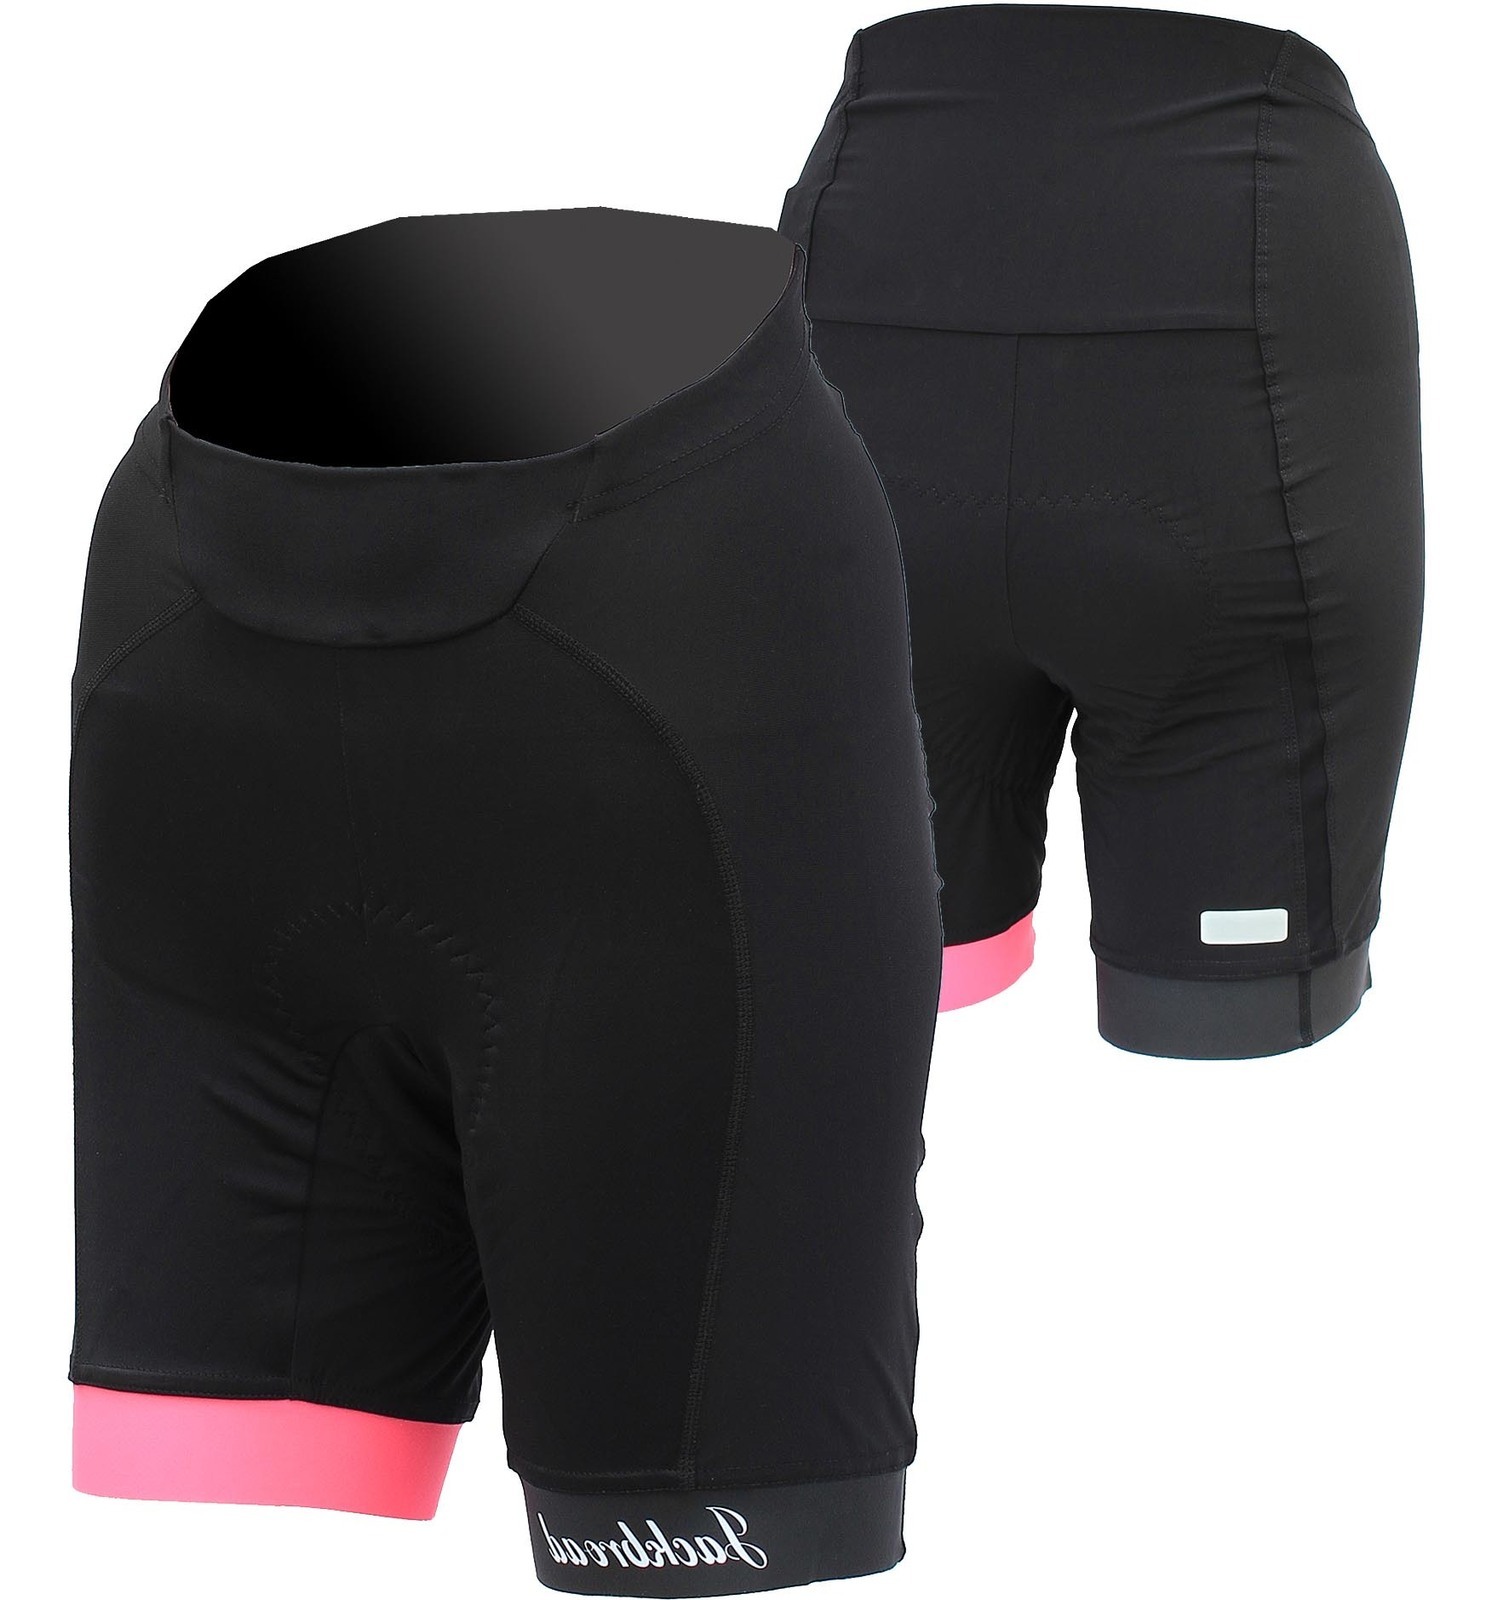 Jackbroad Premium Quality Cycling Padded Shorts Black Pink S